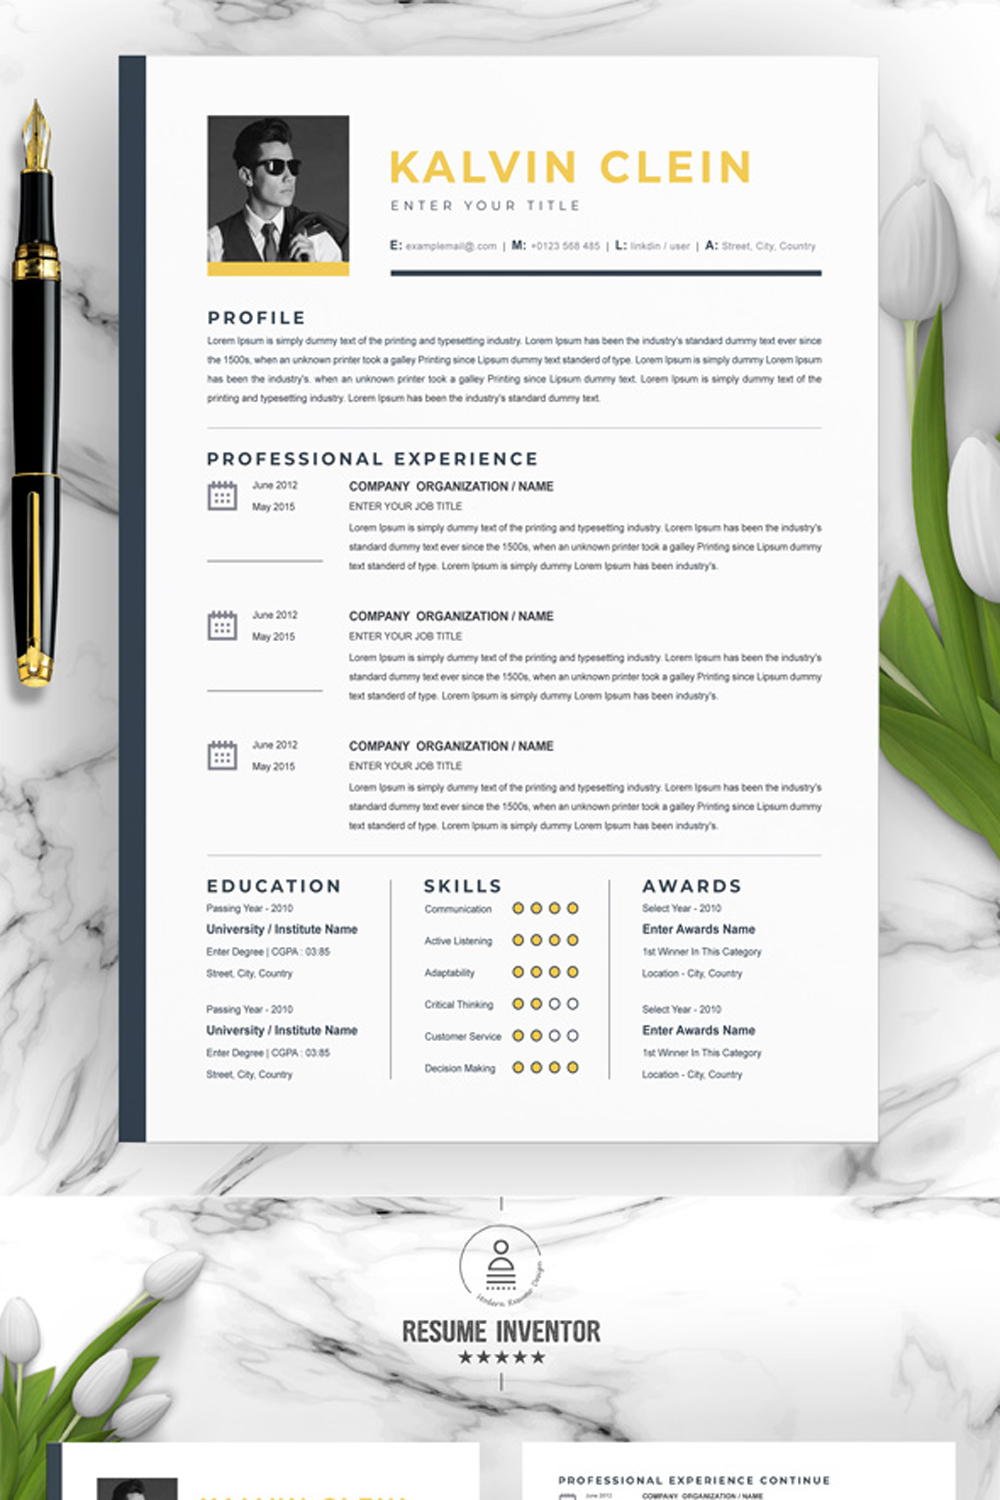 Creative Professional Resume Template | Professional Resume Template pinterest preview image.